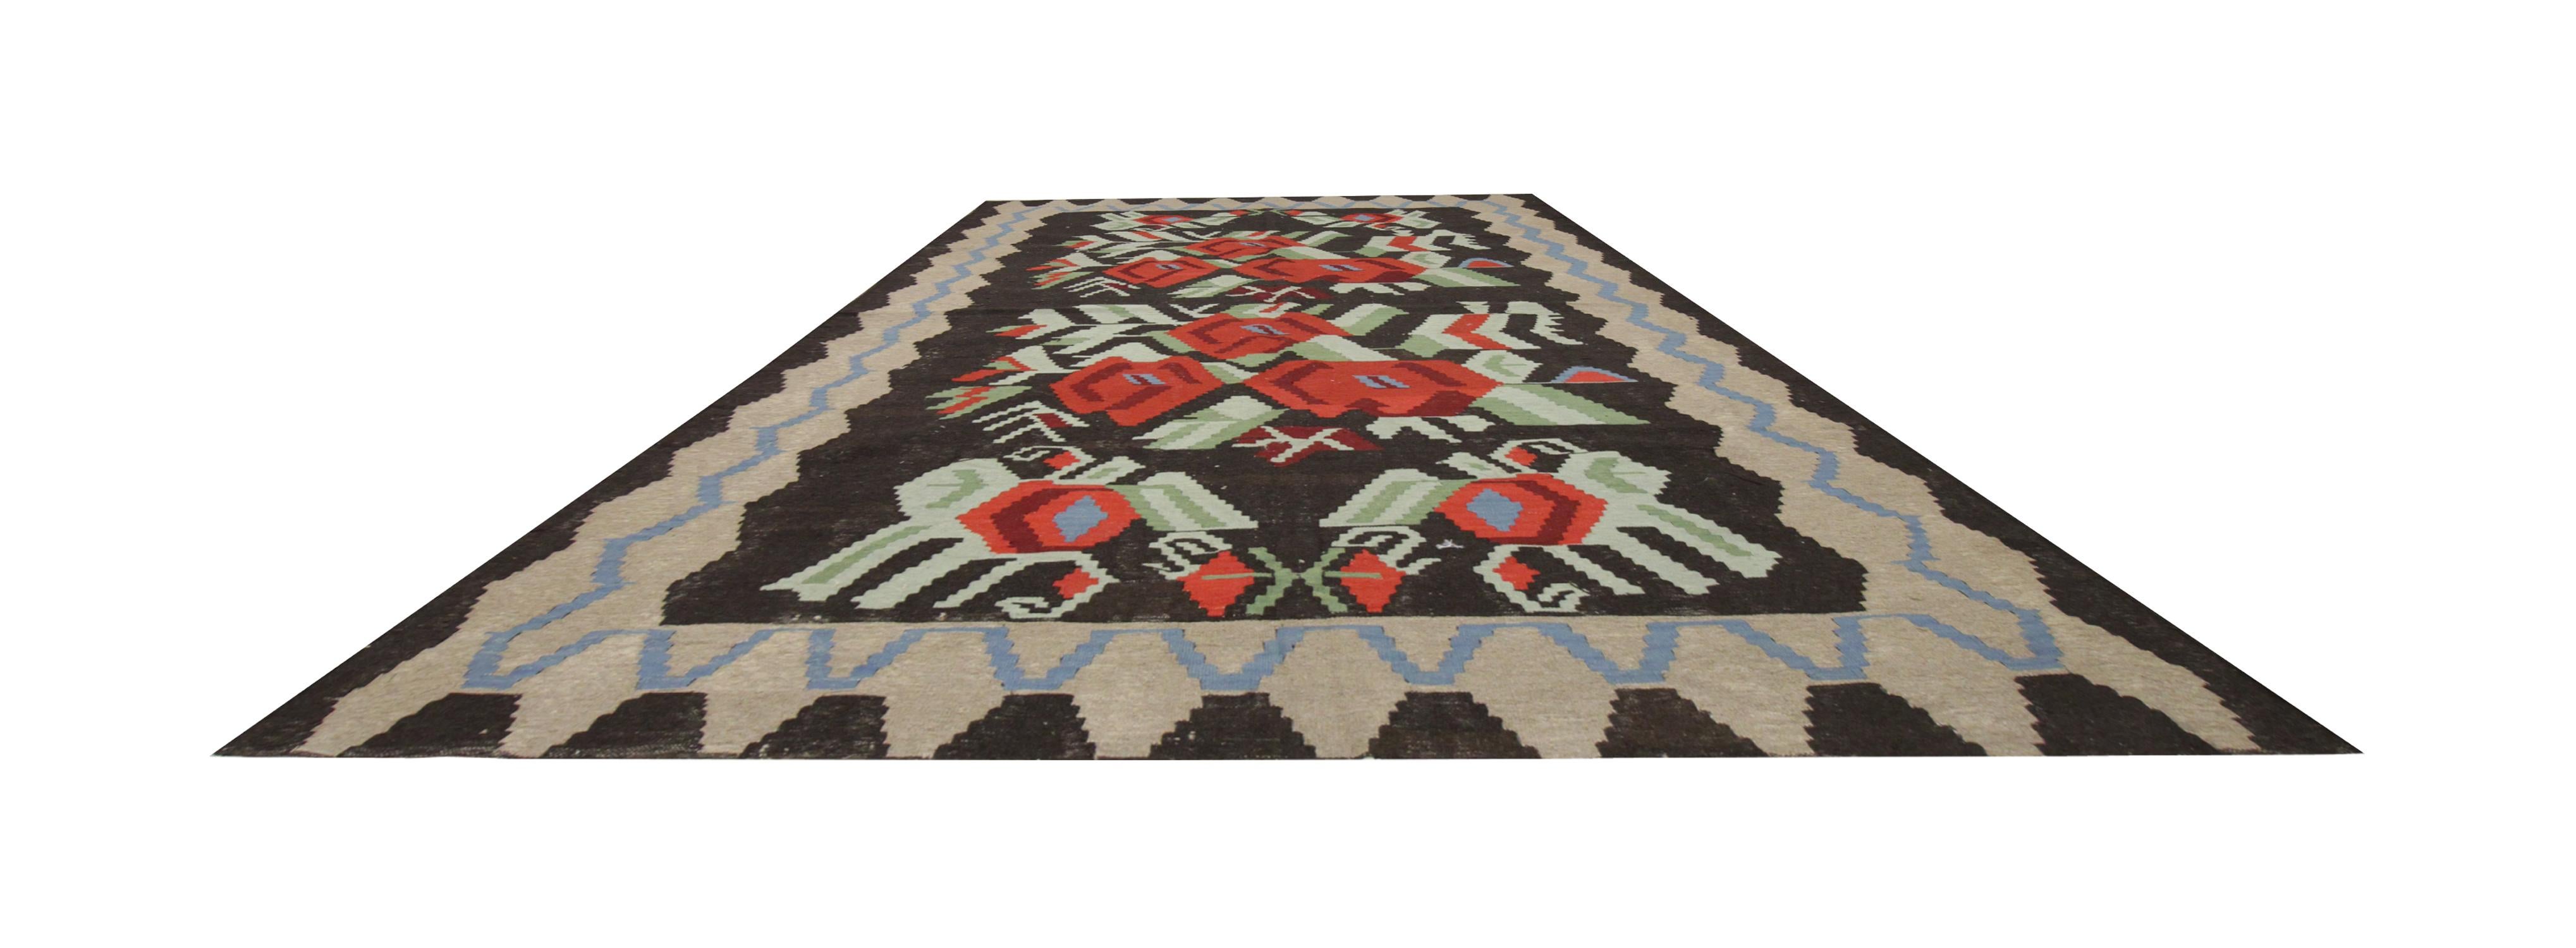 Tribal Floral Kilim Rugs Handmade Carpet Vintage Traditional Wool Rug For Sale